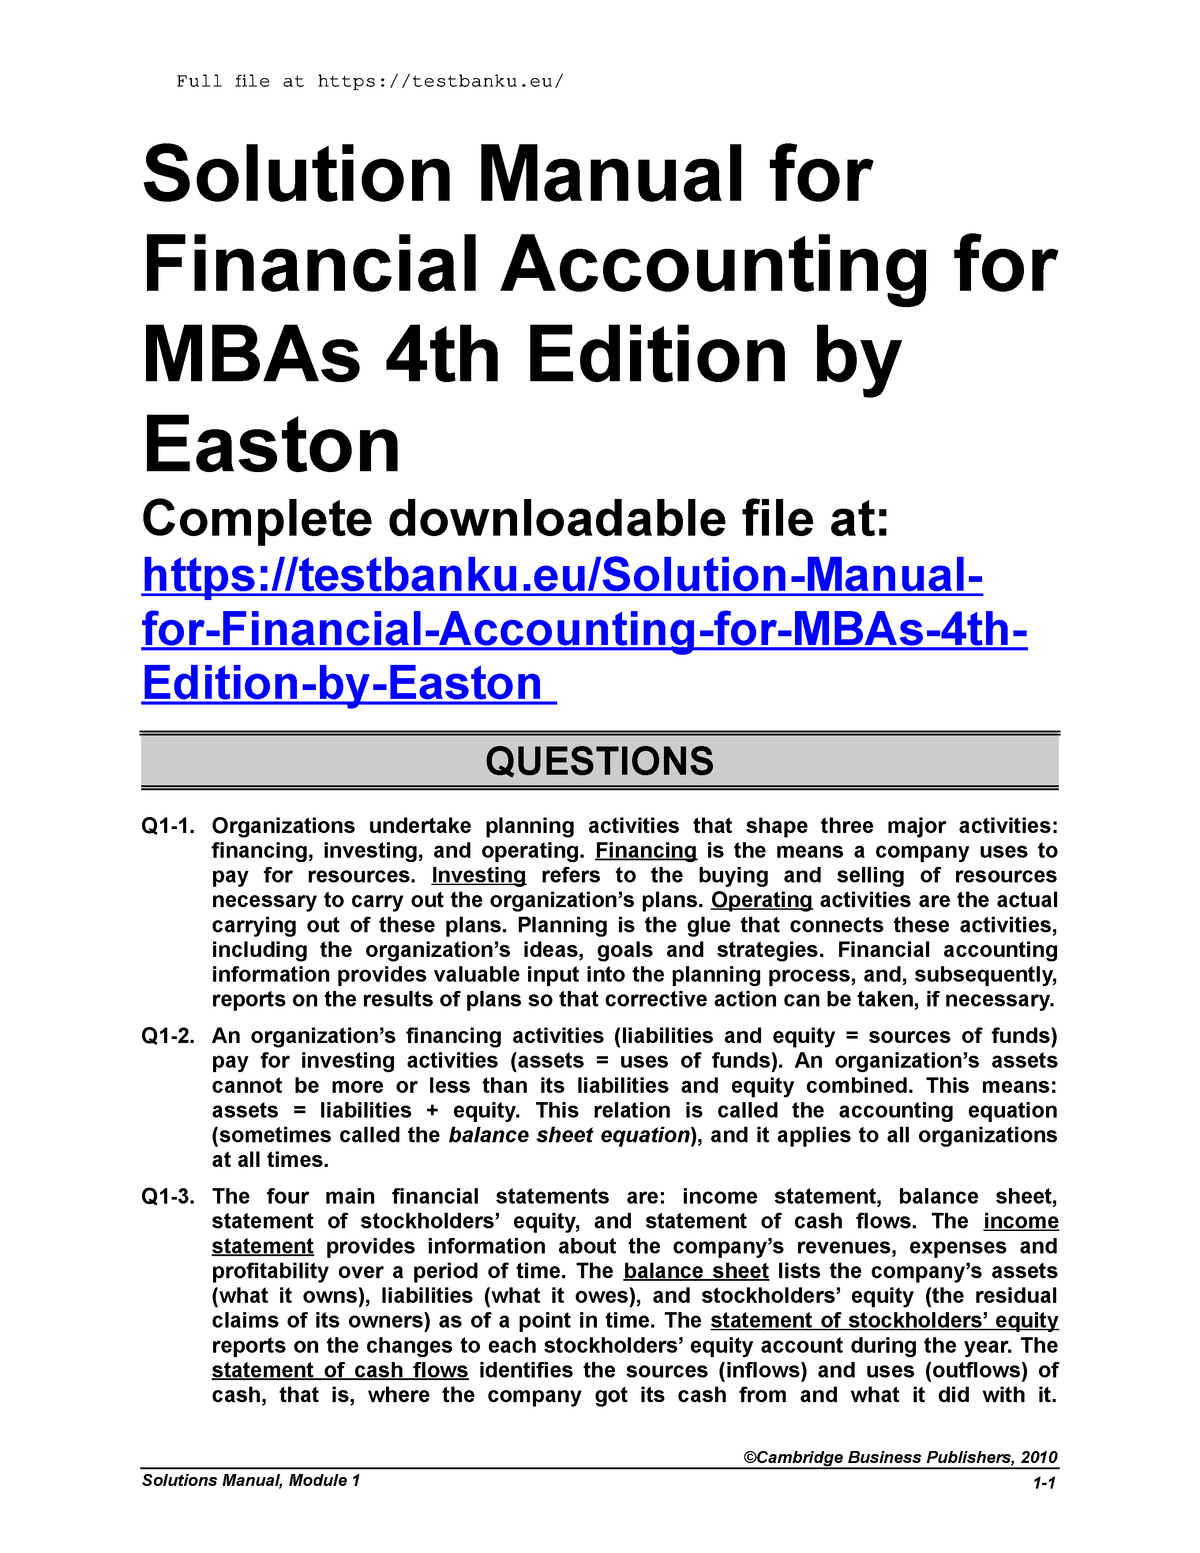 Solution Manual for Financial Accounting 4e - Full file at testbanku/  Solution Manual for Financial - StuDocu